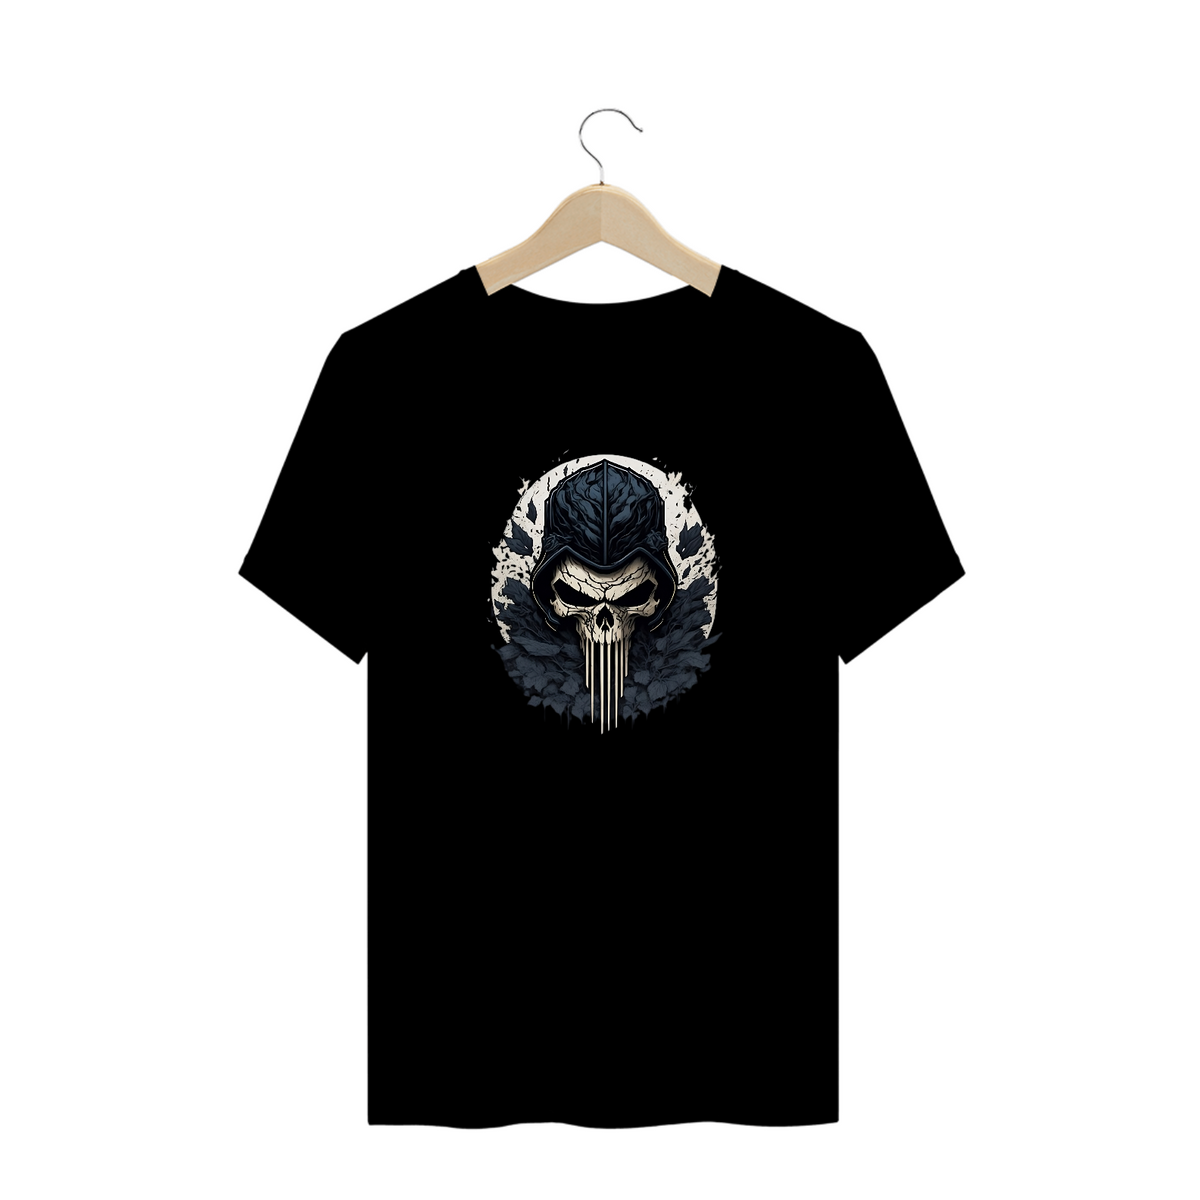 Nome do produto: Camisa Skull